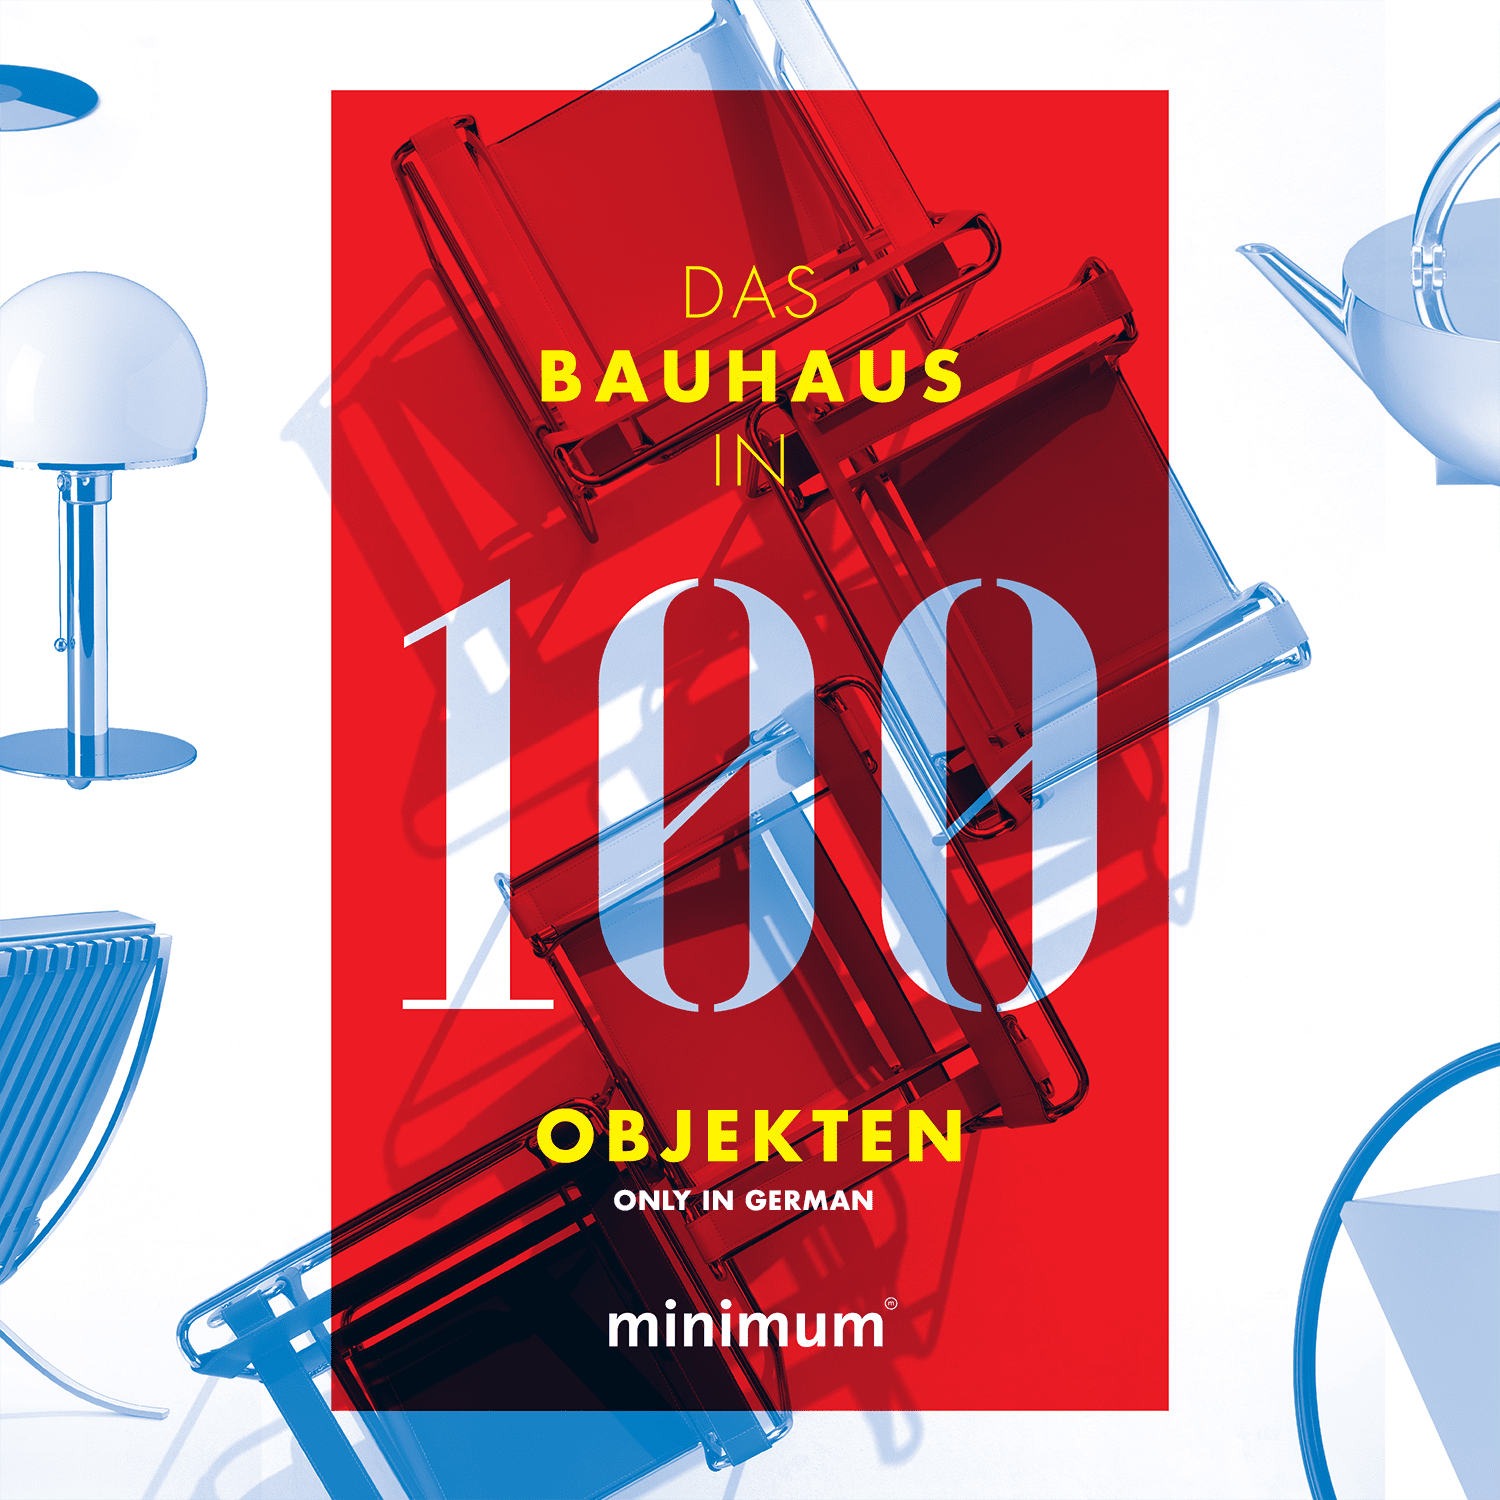 100 Nesnede Bauhaus resmi